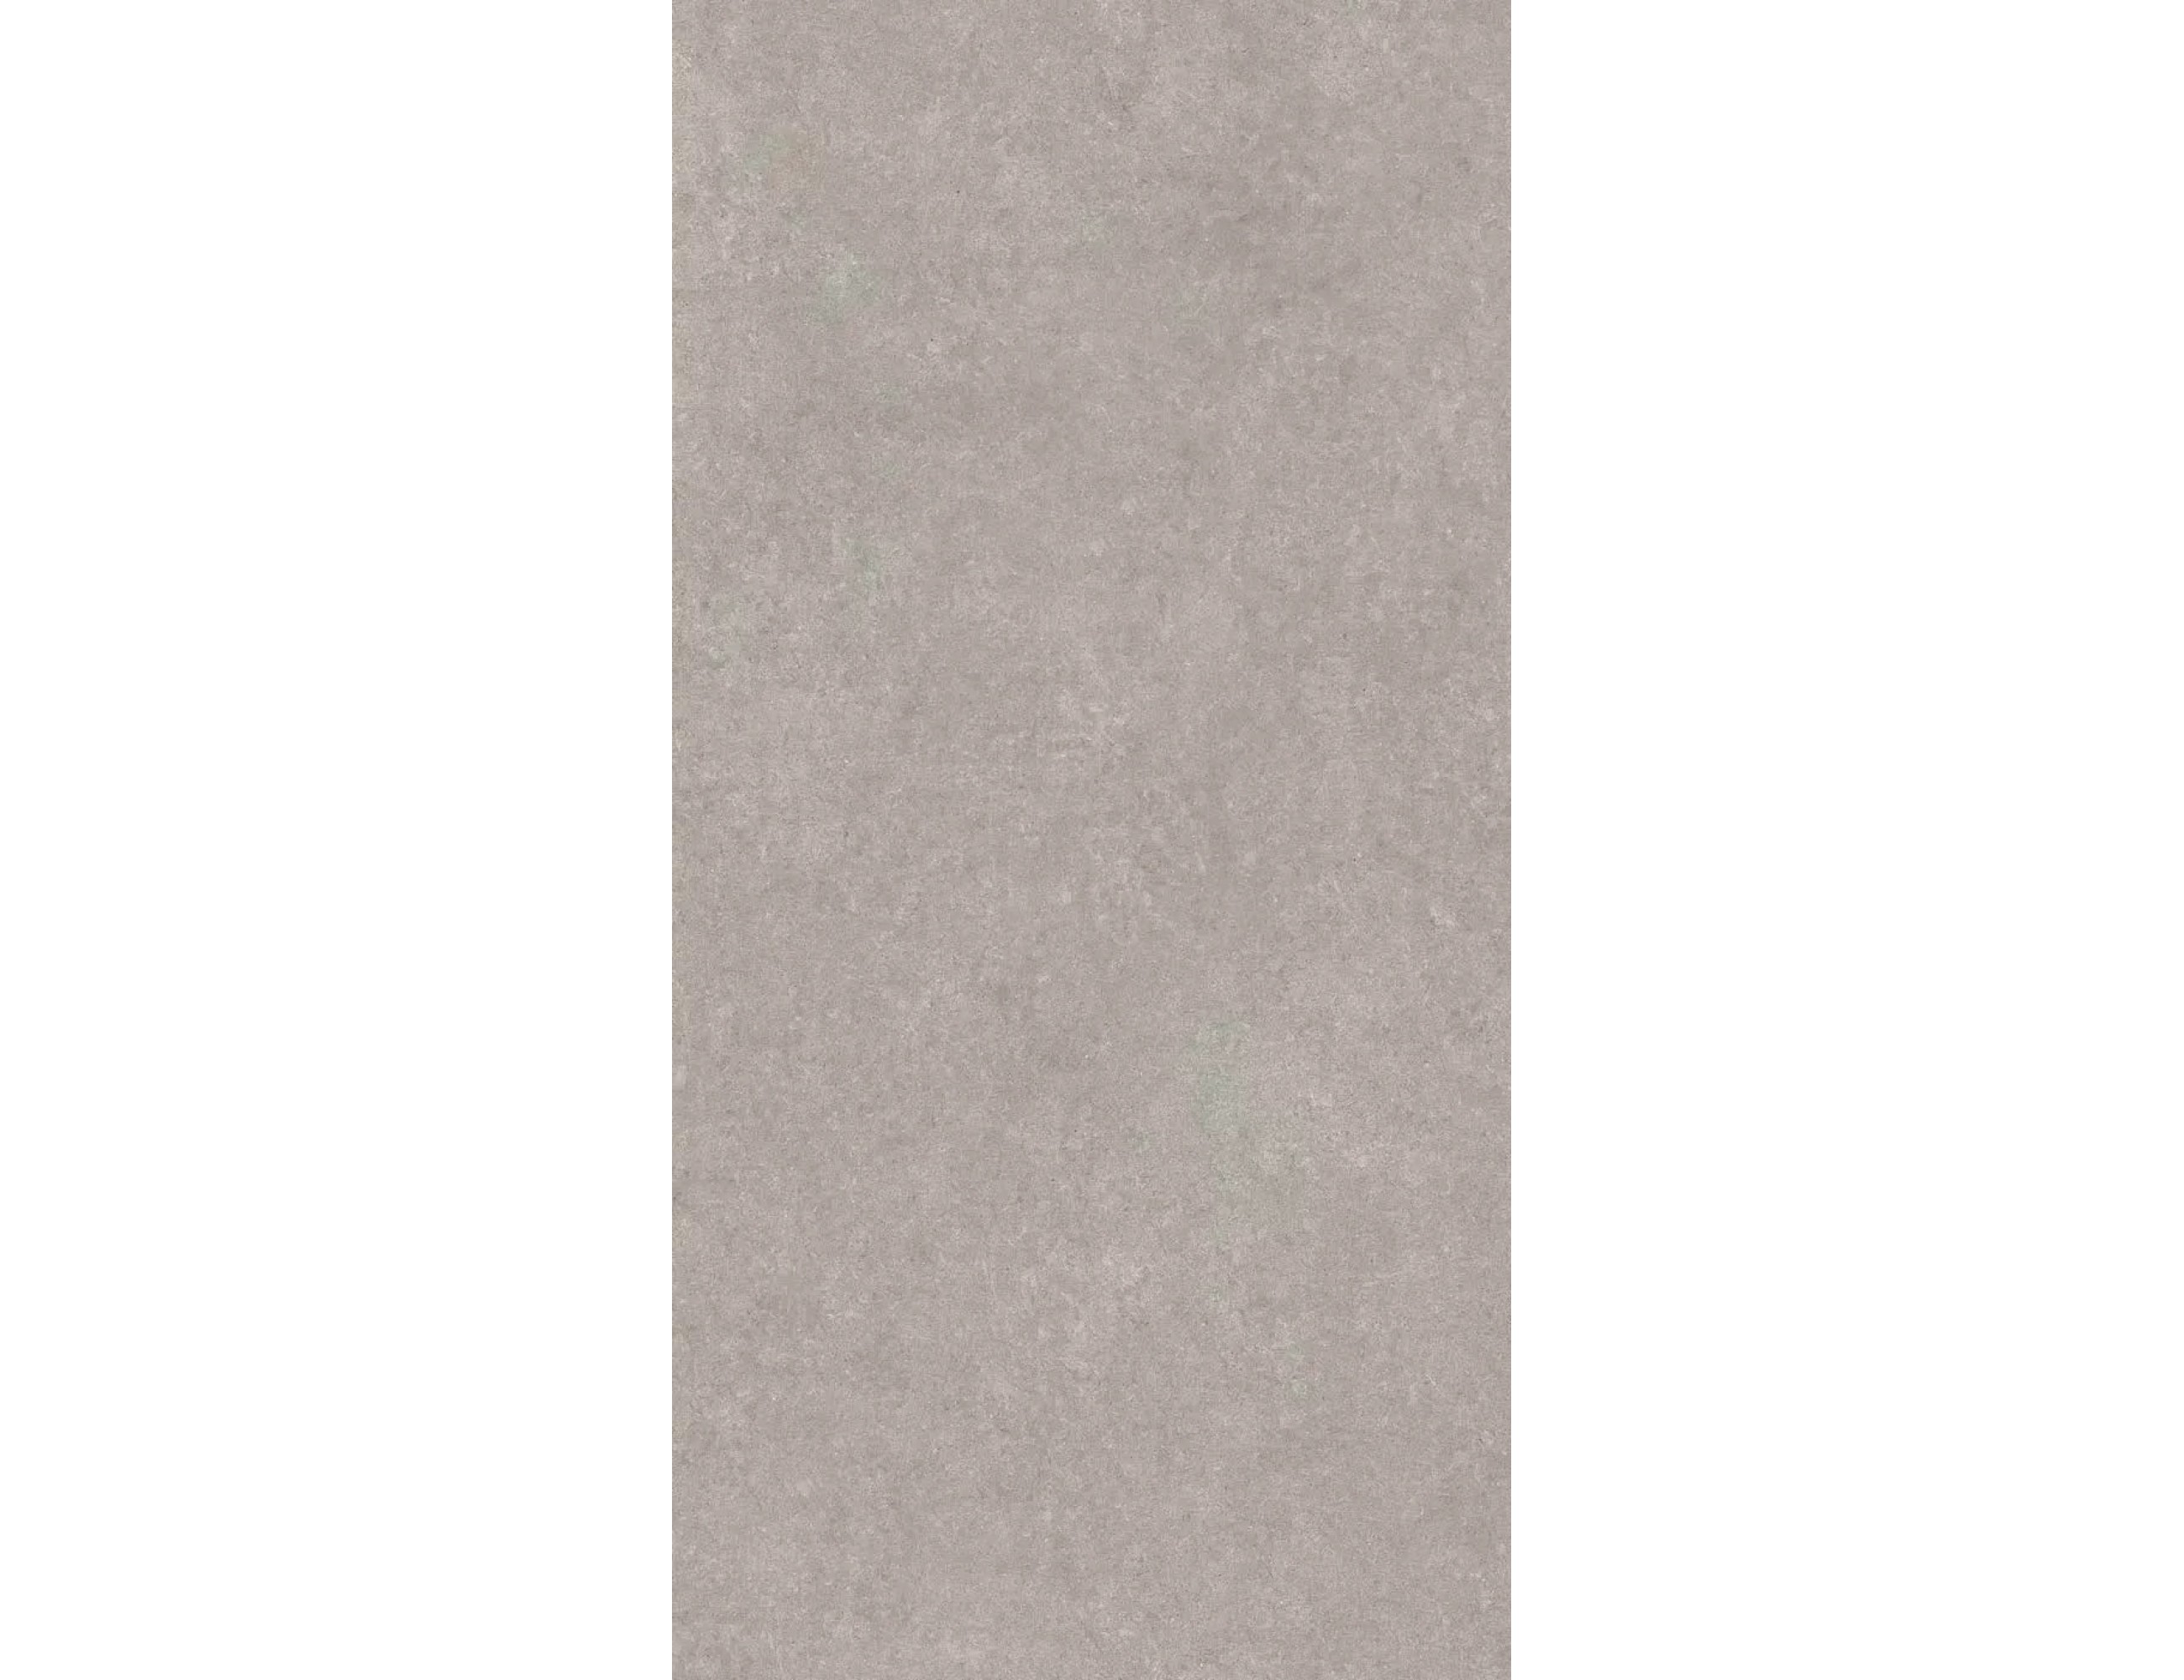 Grey Sandstone